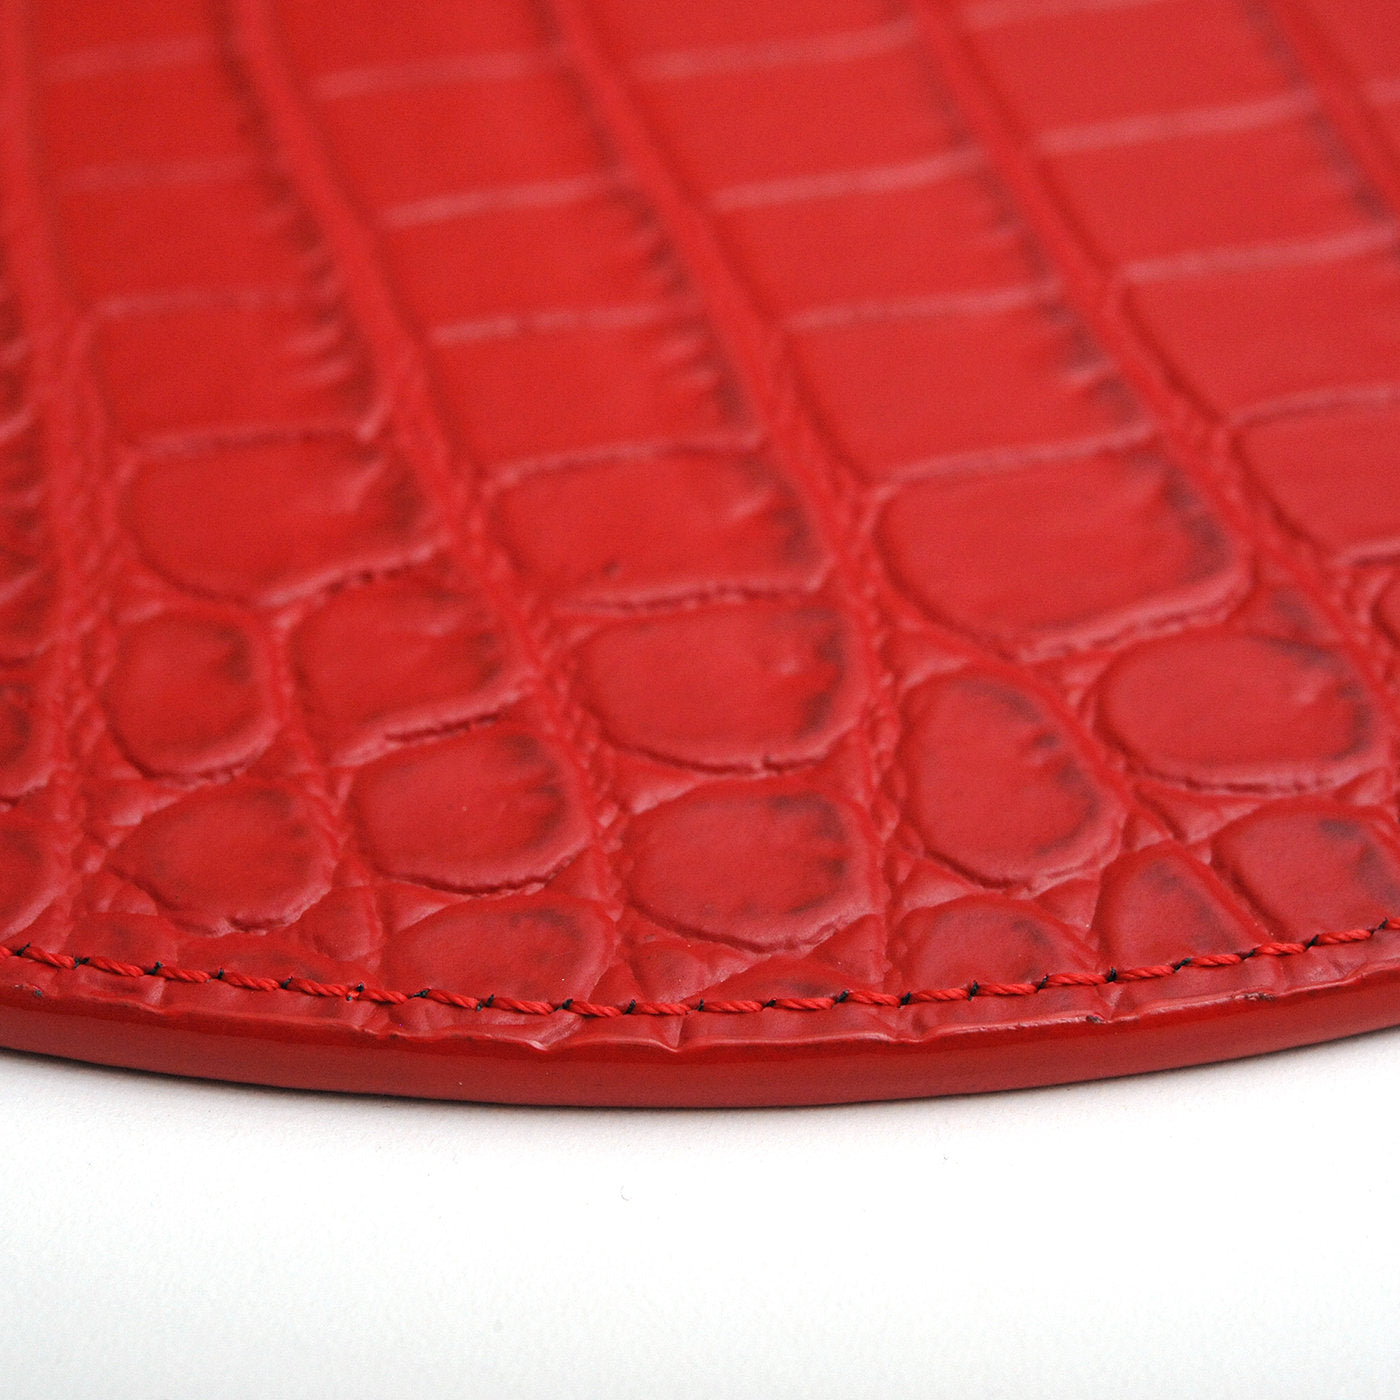 Kenya Medium Set of 2 Round Red Leather Placemats - Alternative view 4